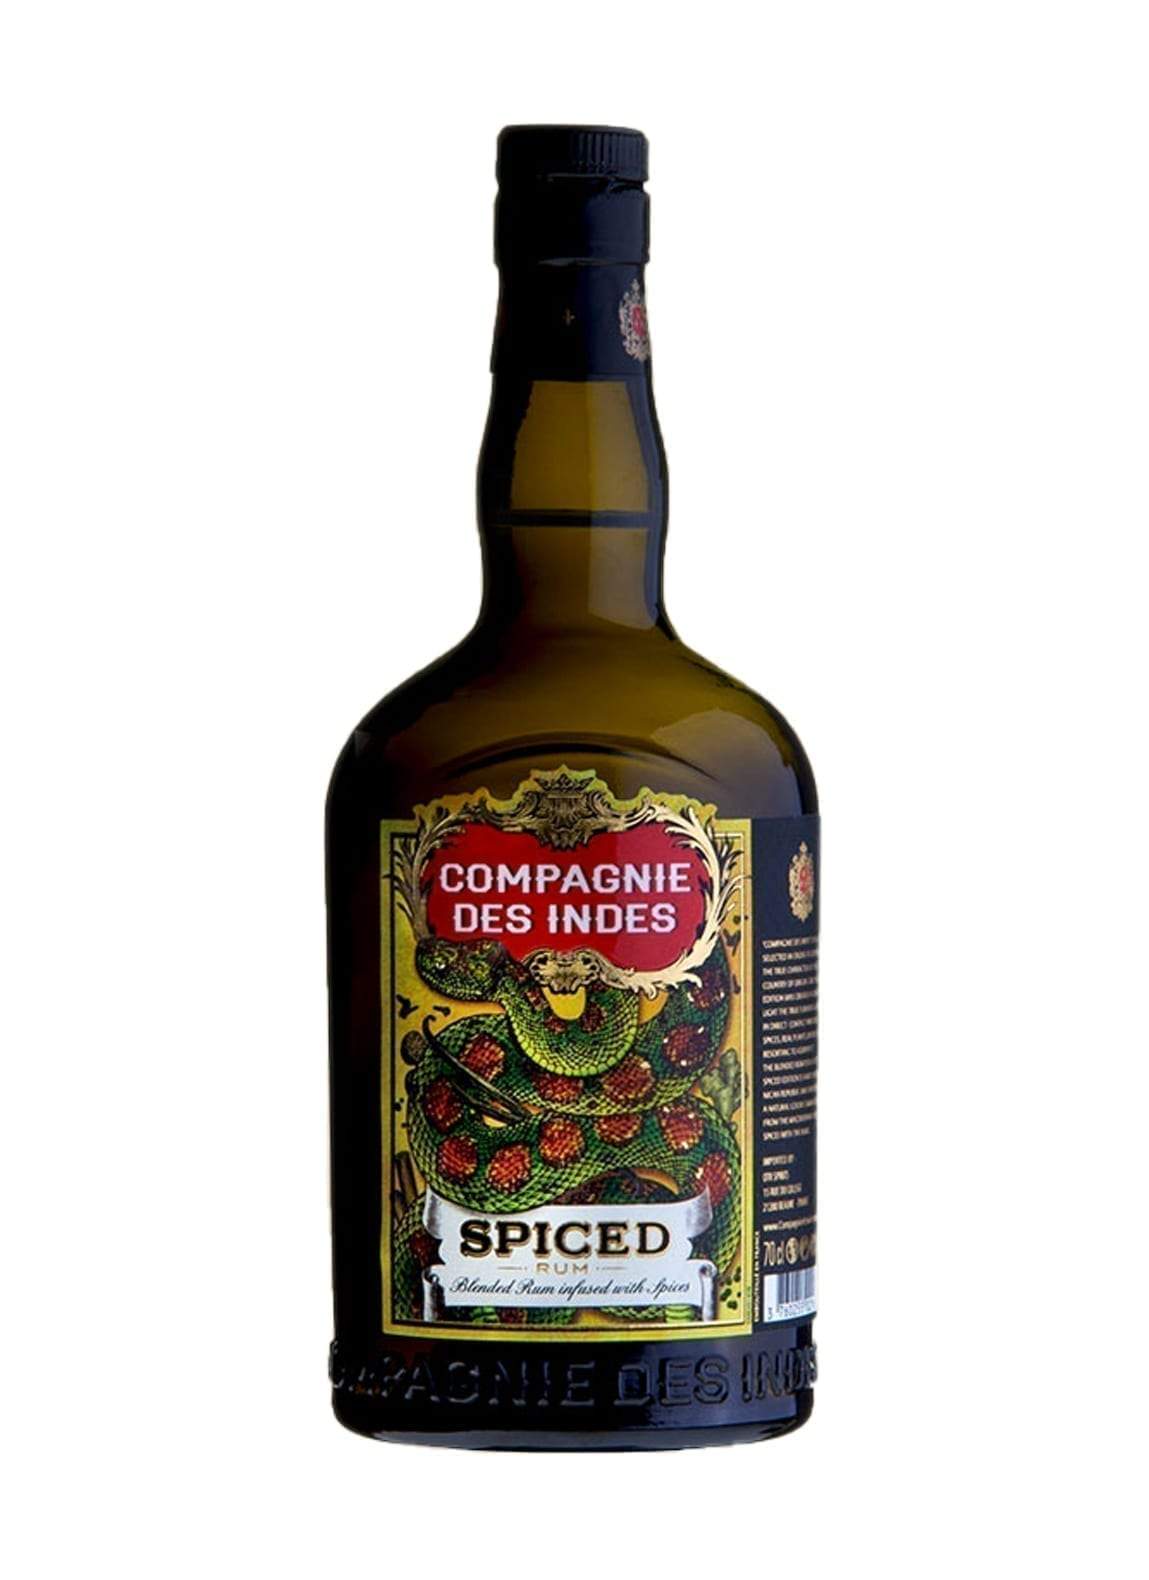 Compagnie Des Indes Spiced Rum 40% 700ml | Rum | Shop online at Spirits of France